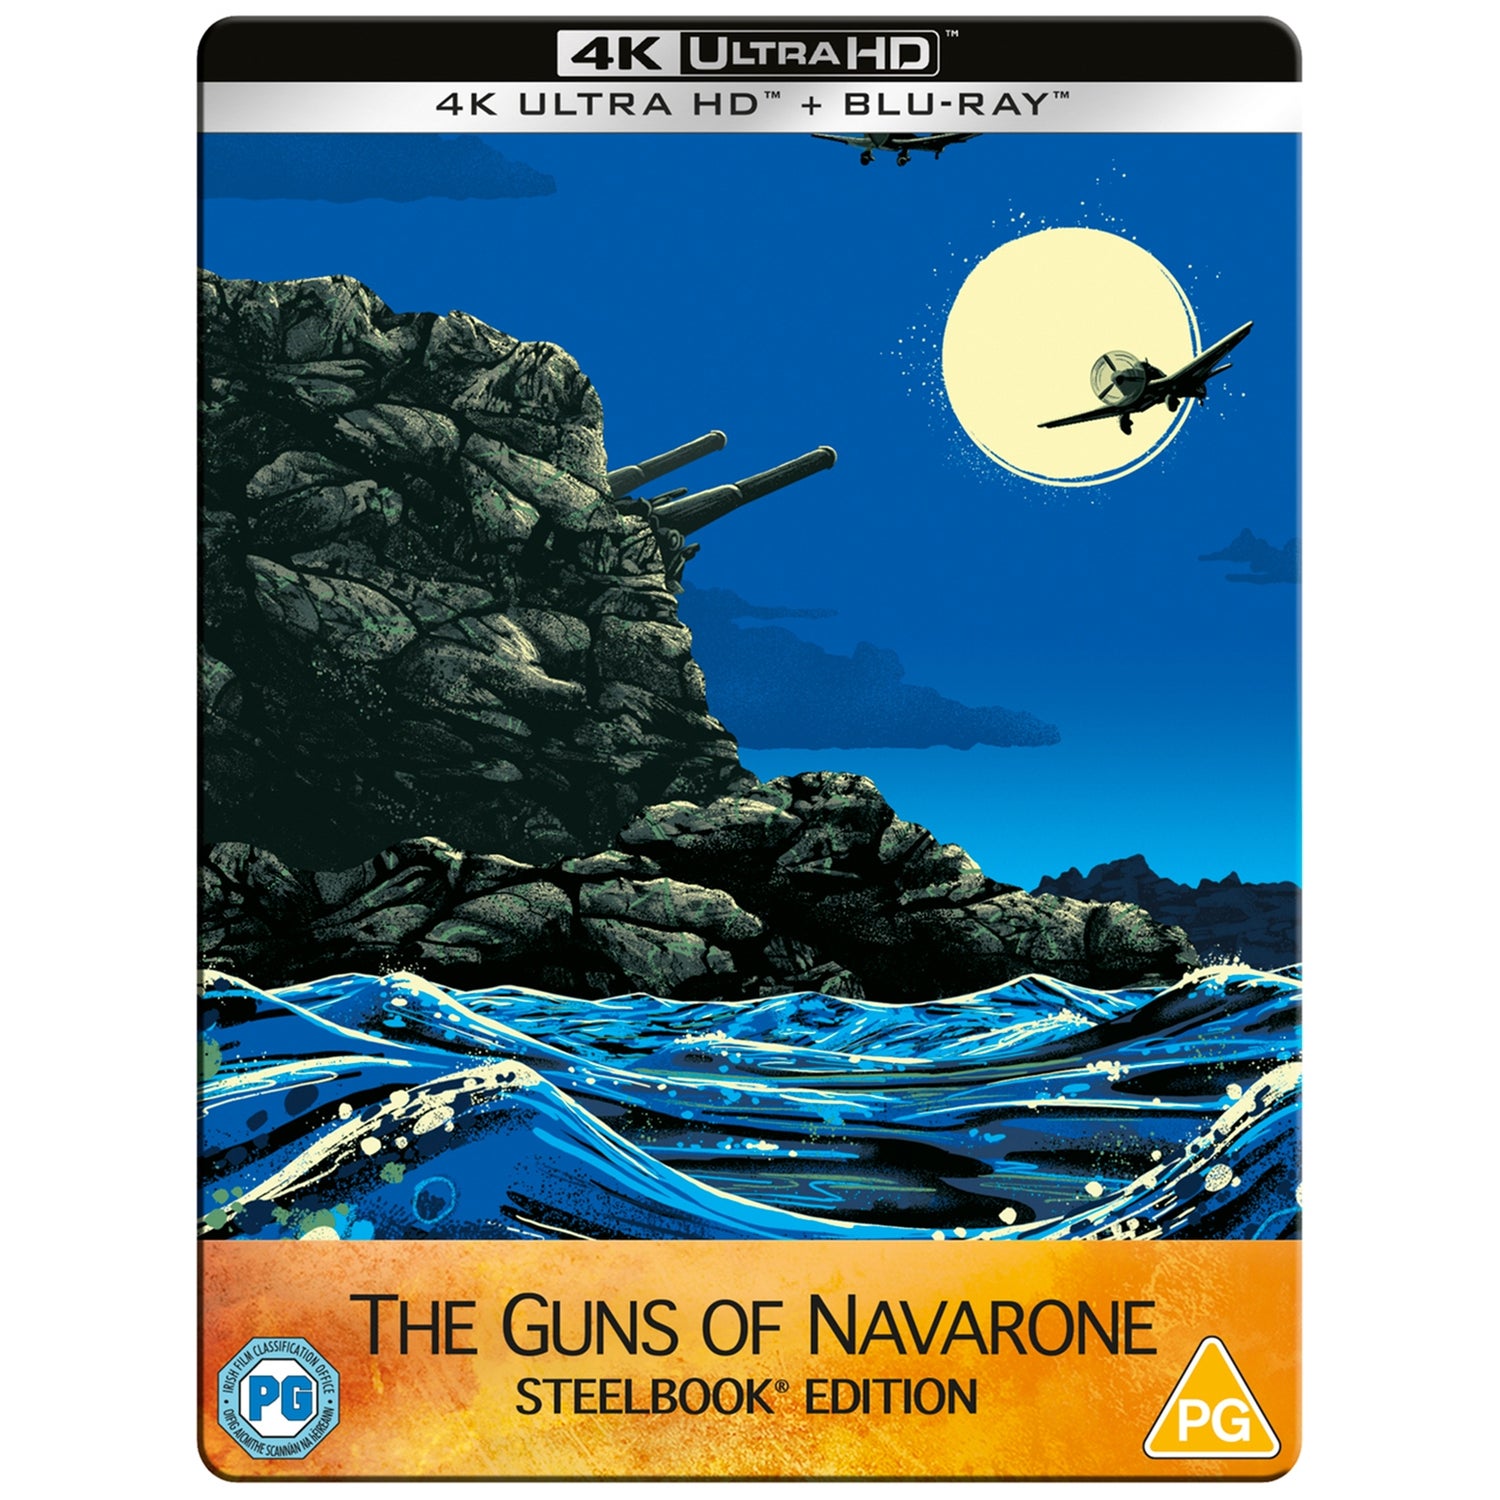 The Guns of Navarone 4K Ultra HD SteelBook